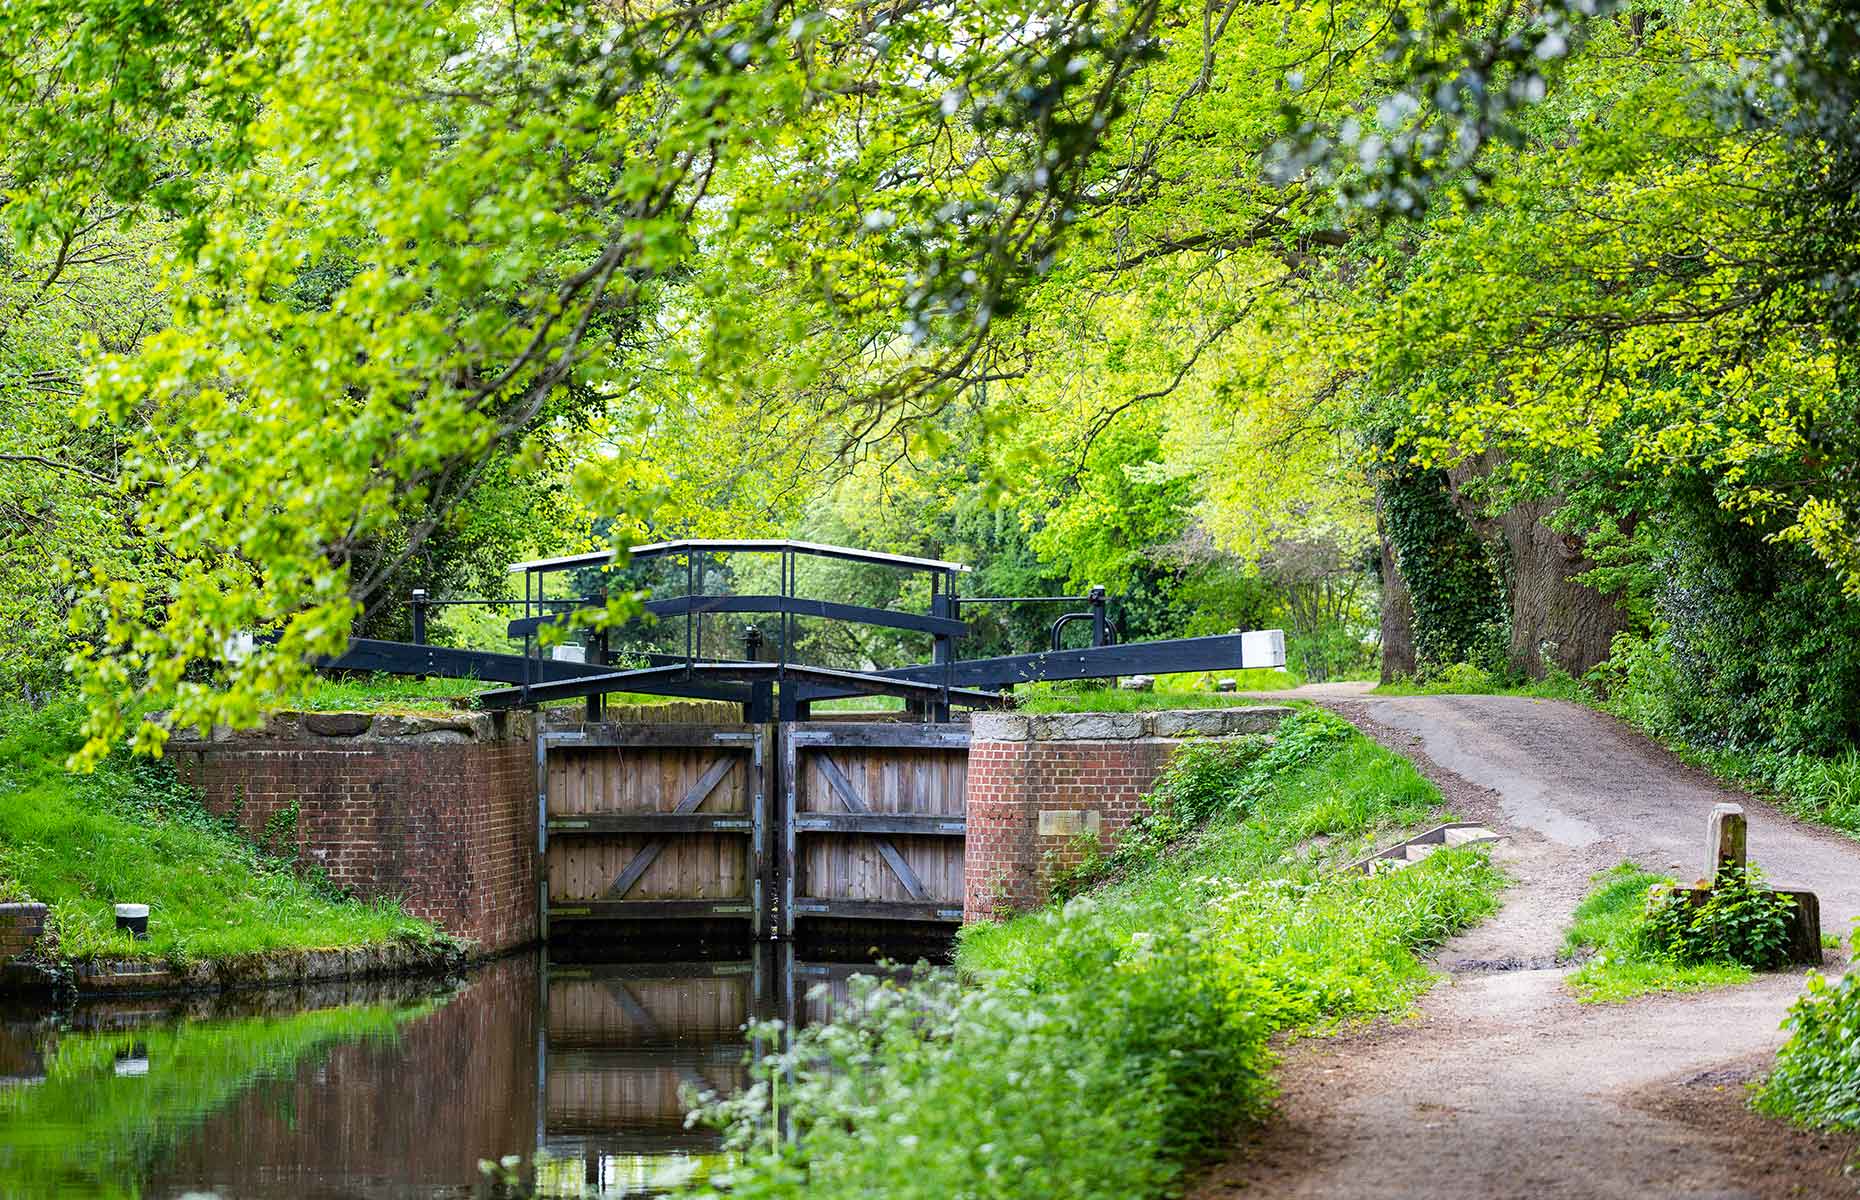 Scenic park in Woking, Surrey (Image credit: Tommy Lee Walker/Shutterstock)